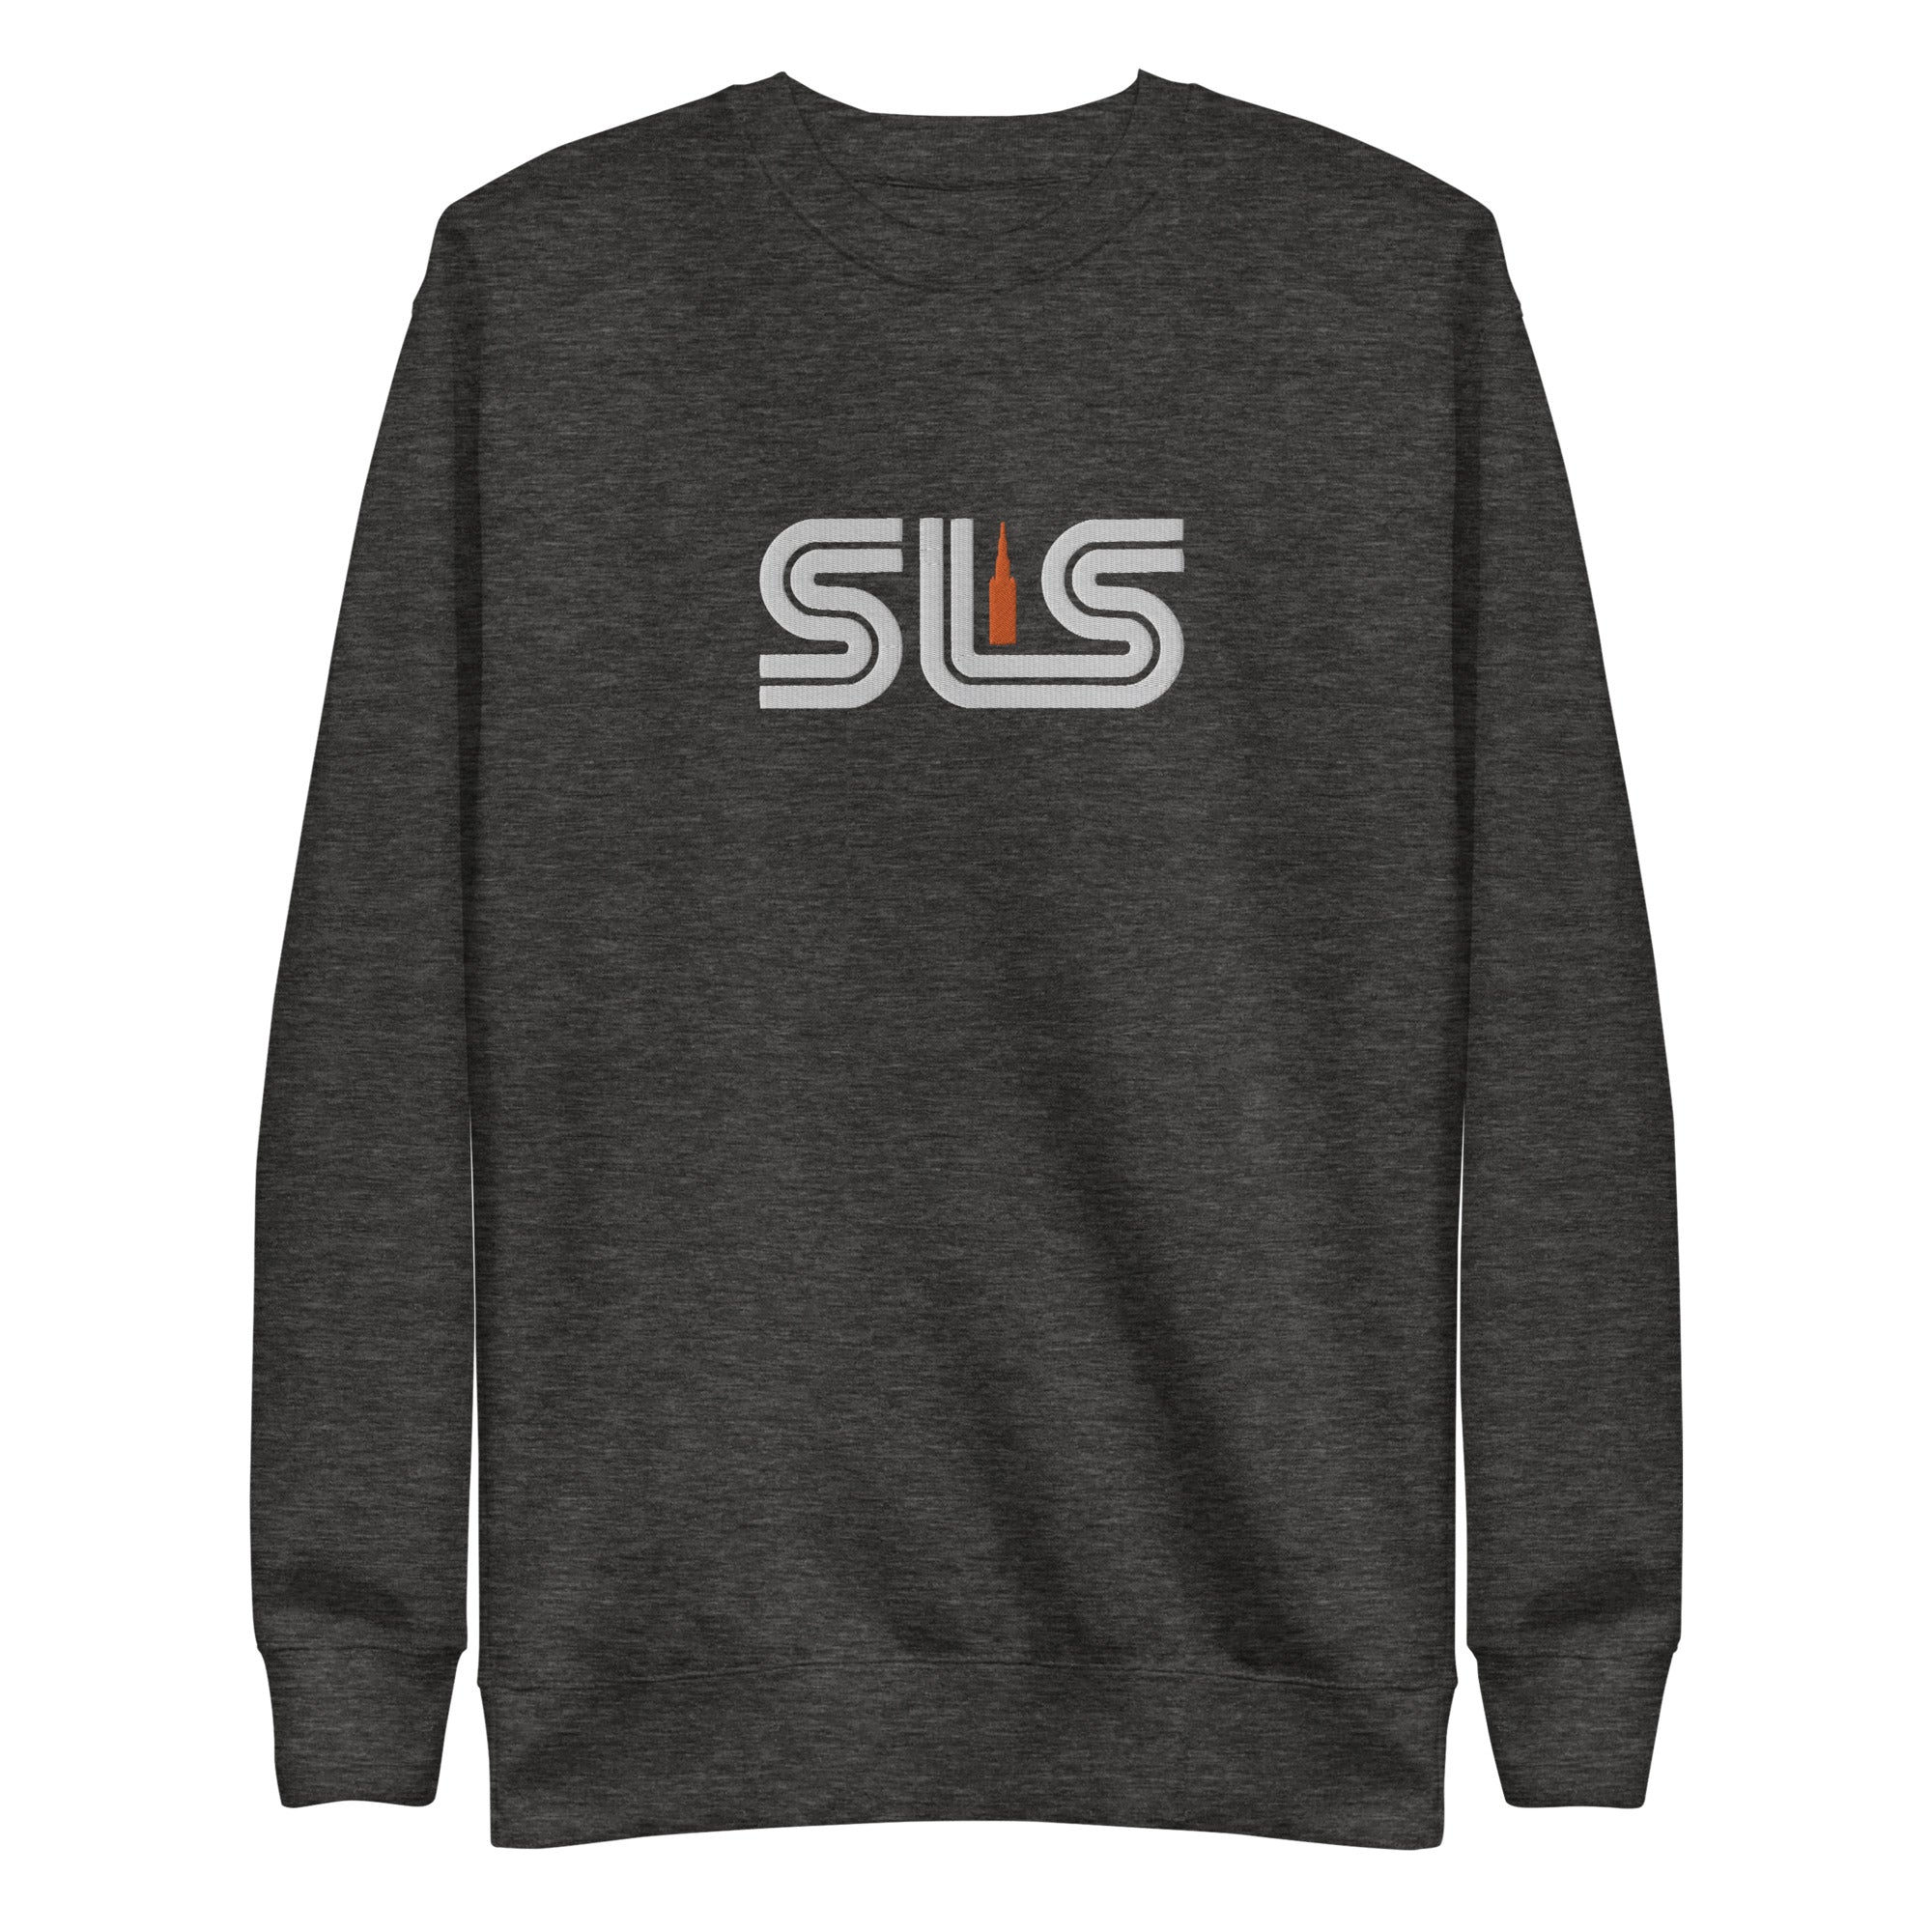 SLS - Unisex Sweatshirt